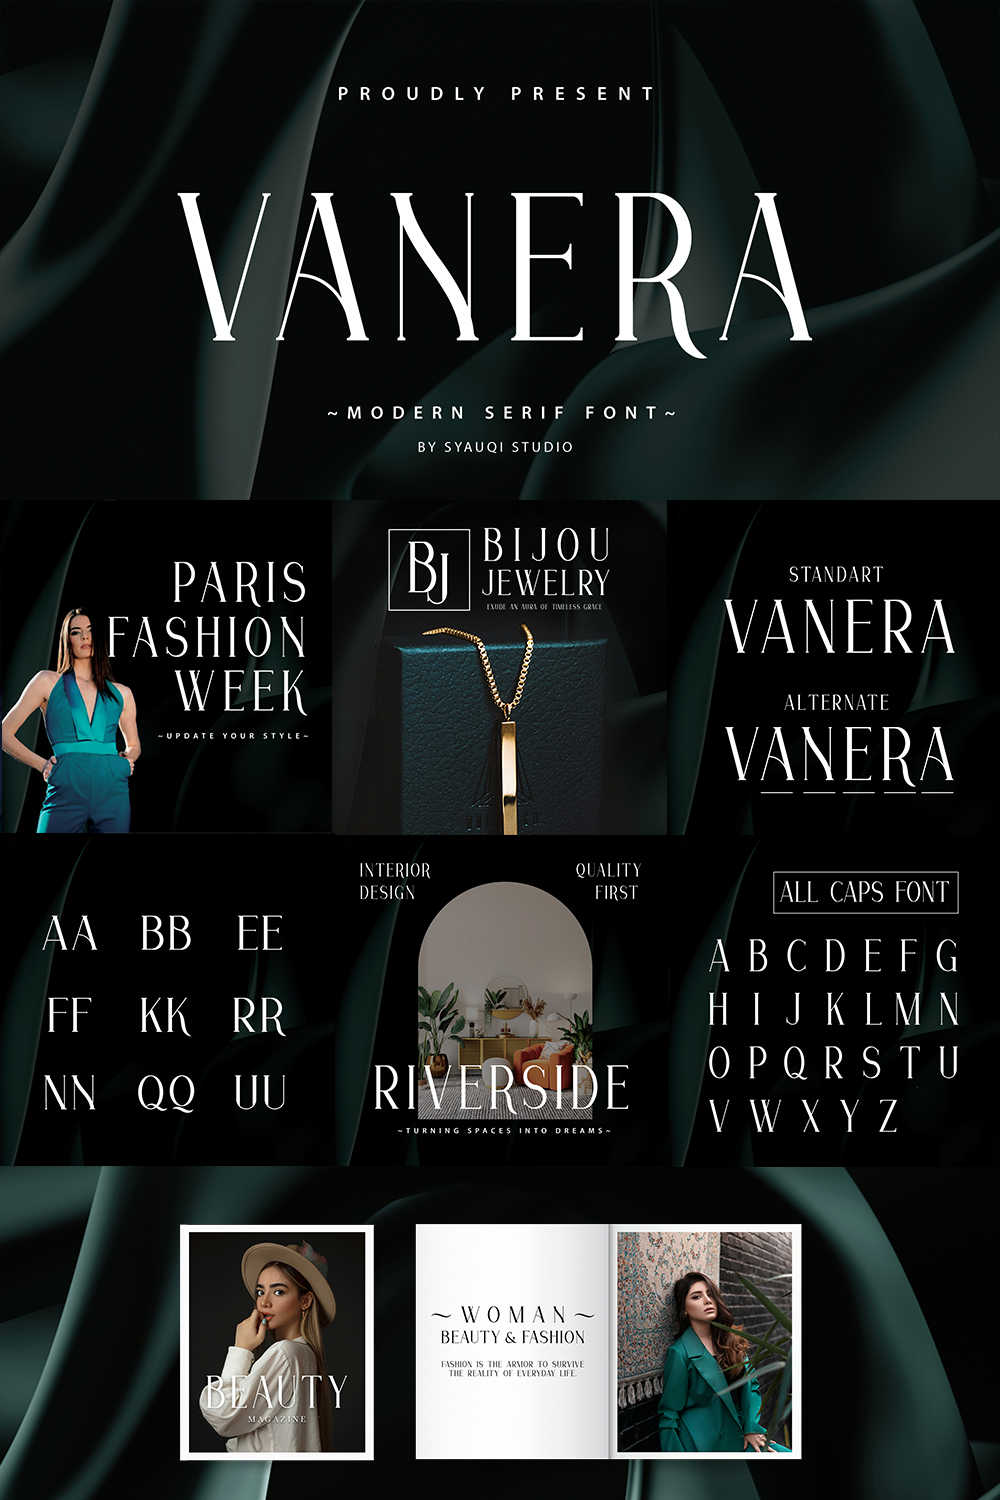 Vanera - Modern Serif Font pinterest preview image.